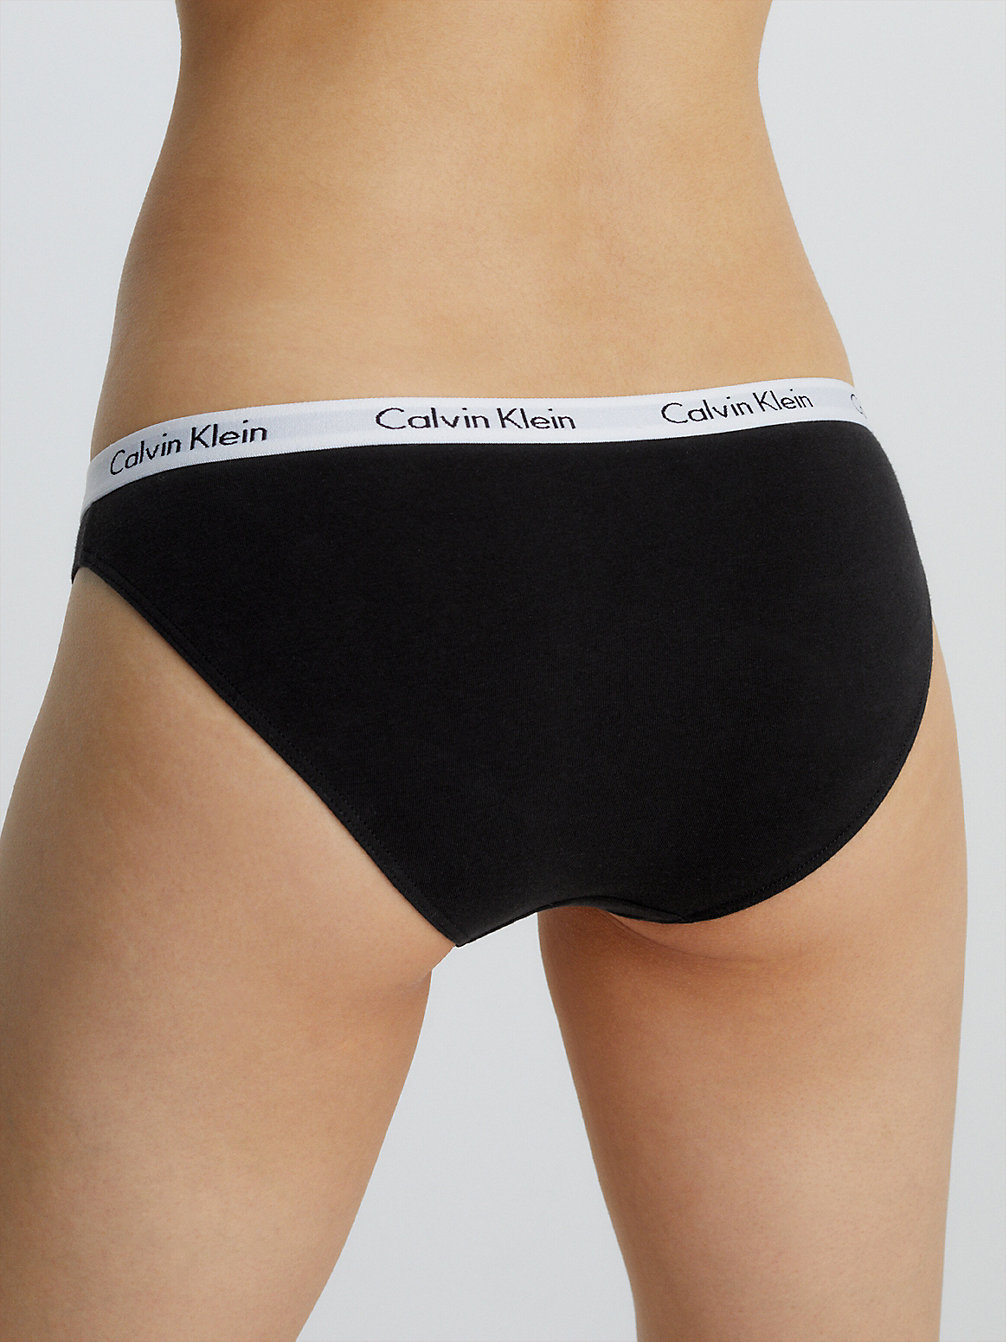 BLACK > Figi - Carousel > undefined Kobiety - Calvin Klein